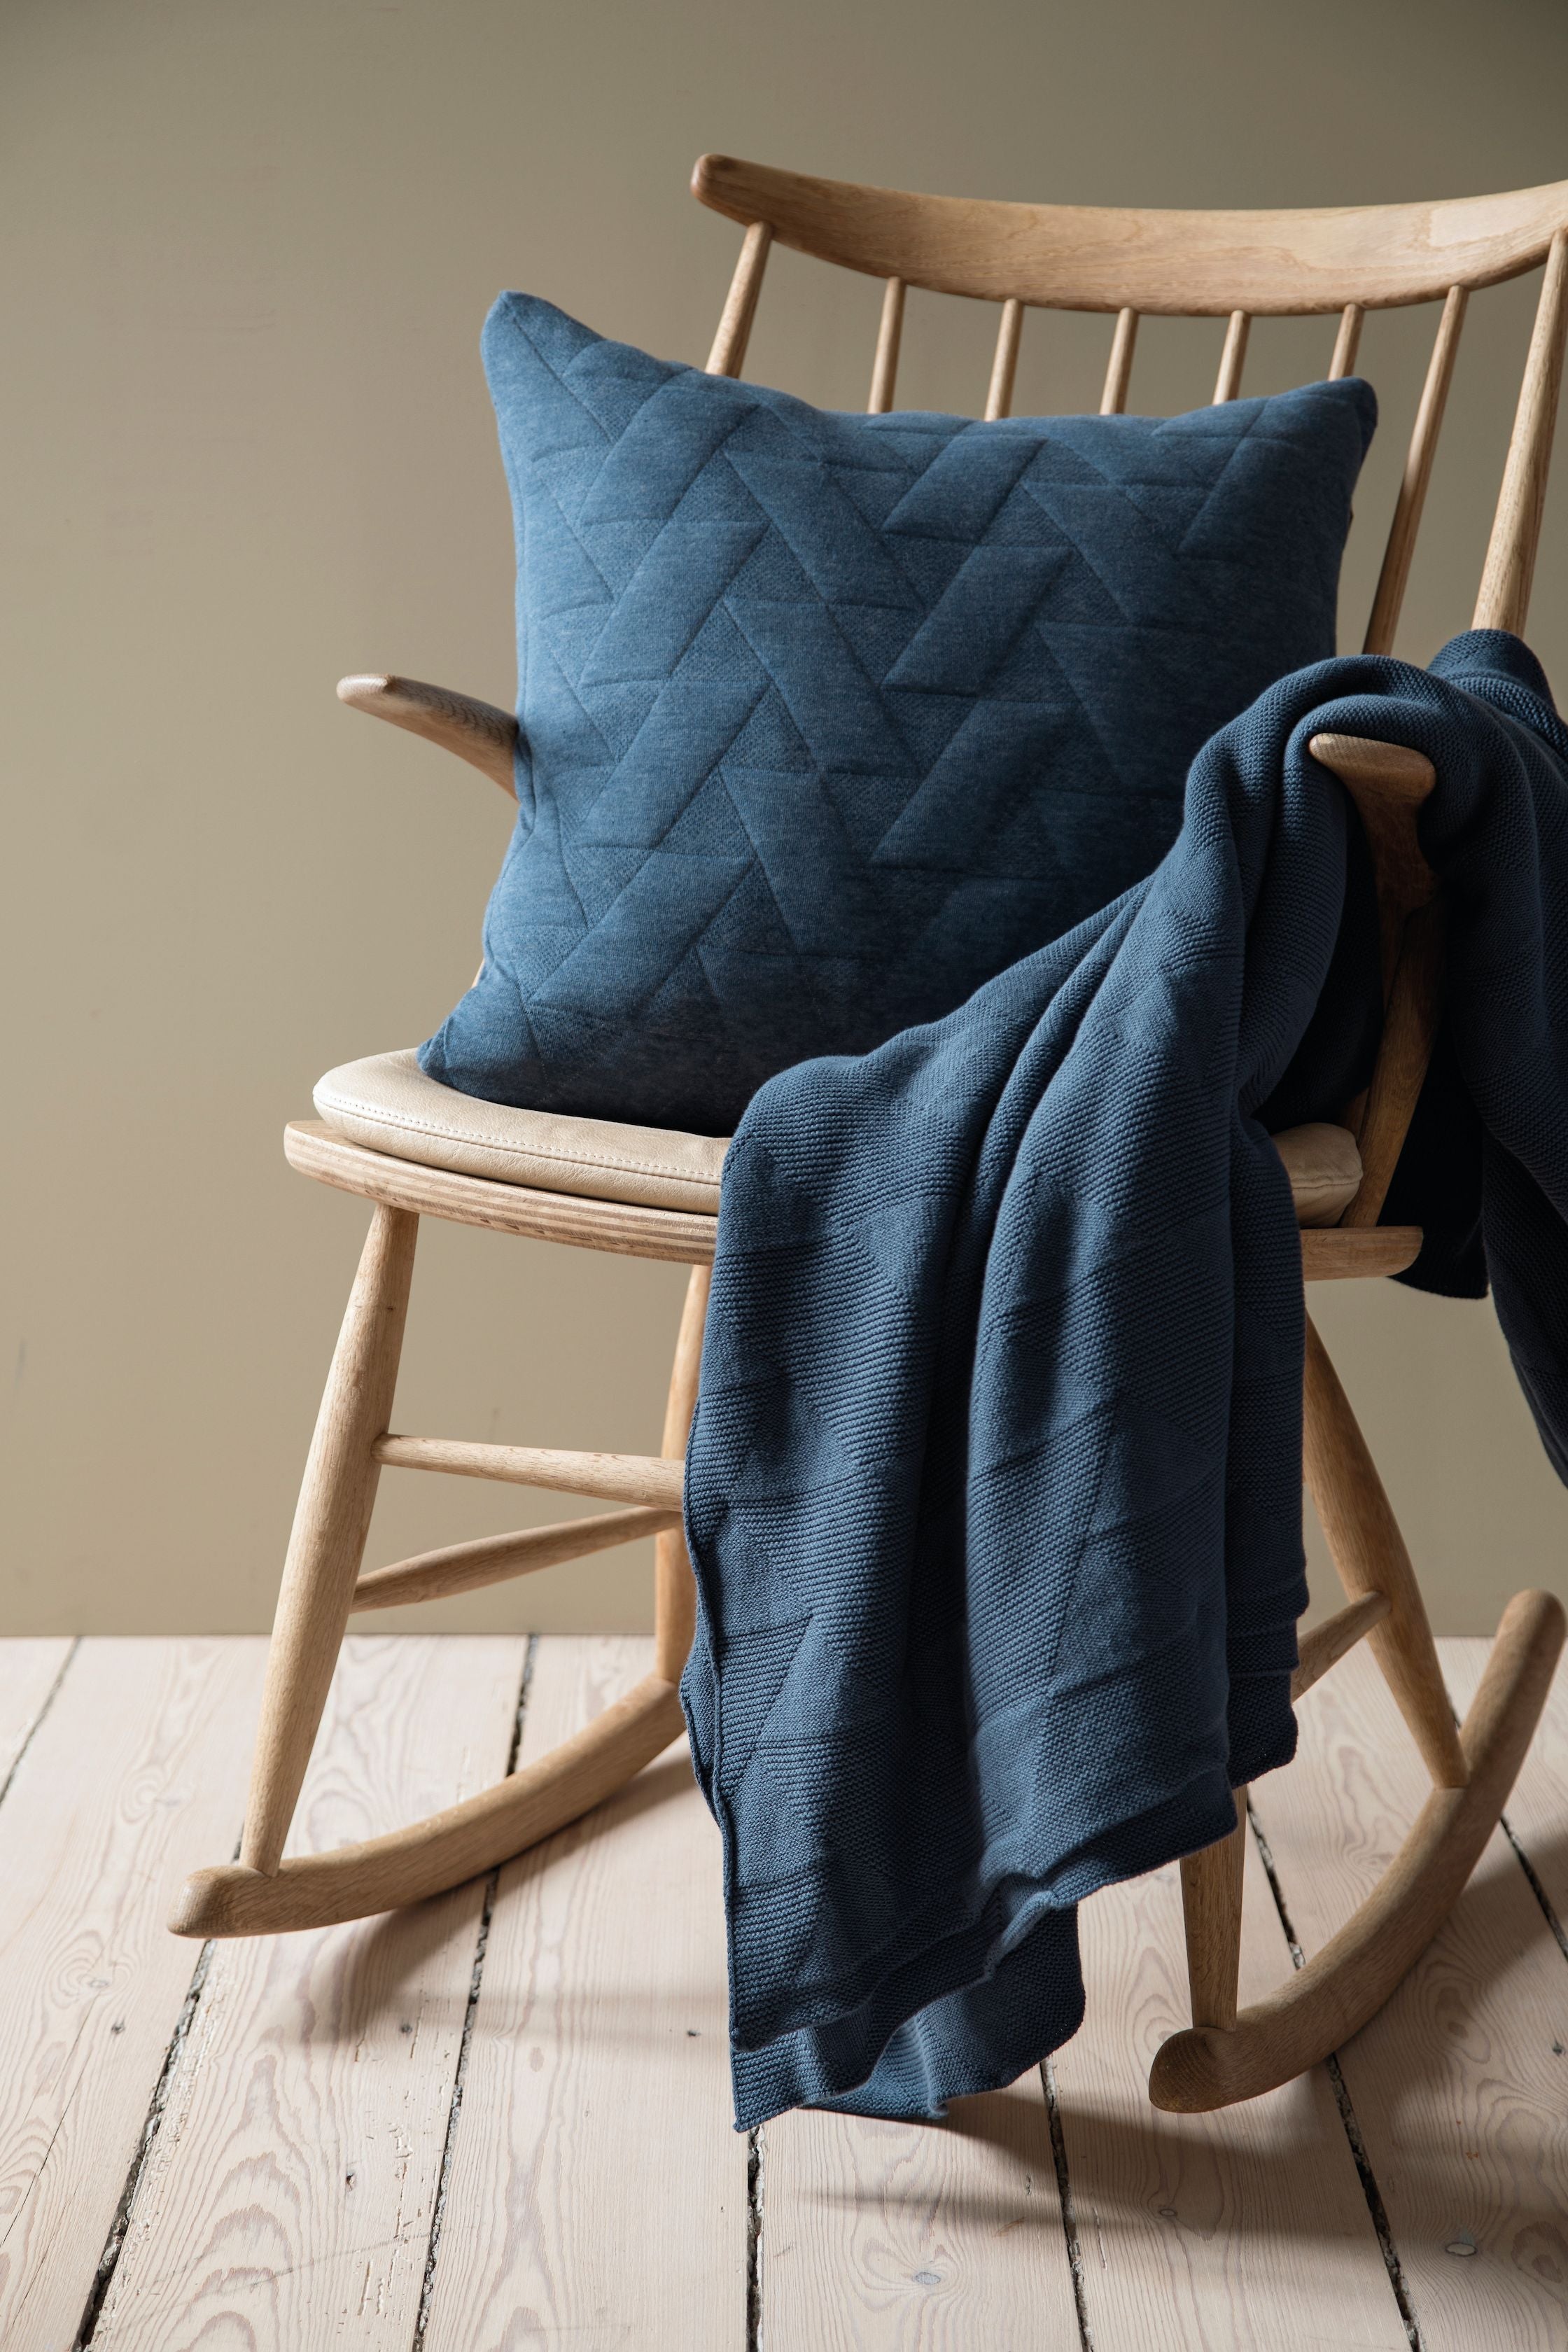 Architectmade Finn Juhl Muster-Decke, Blau